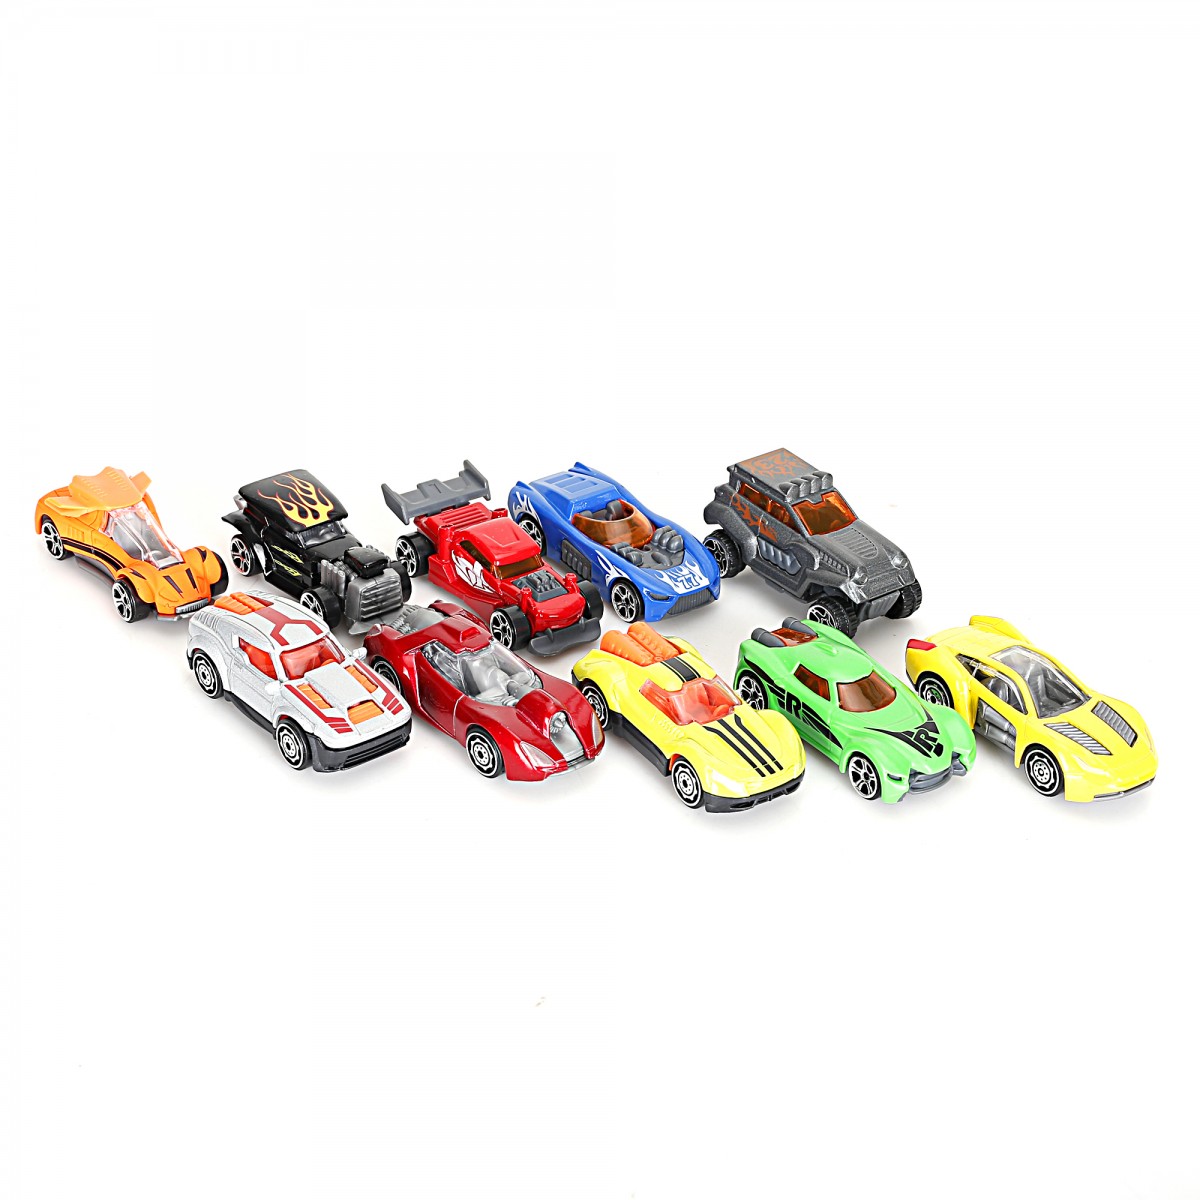 Ralleyz Pro Firefleet Street Machines Die Cast Toy Cars for Kids, Pack of 10, 3Y+